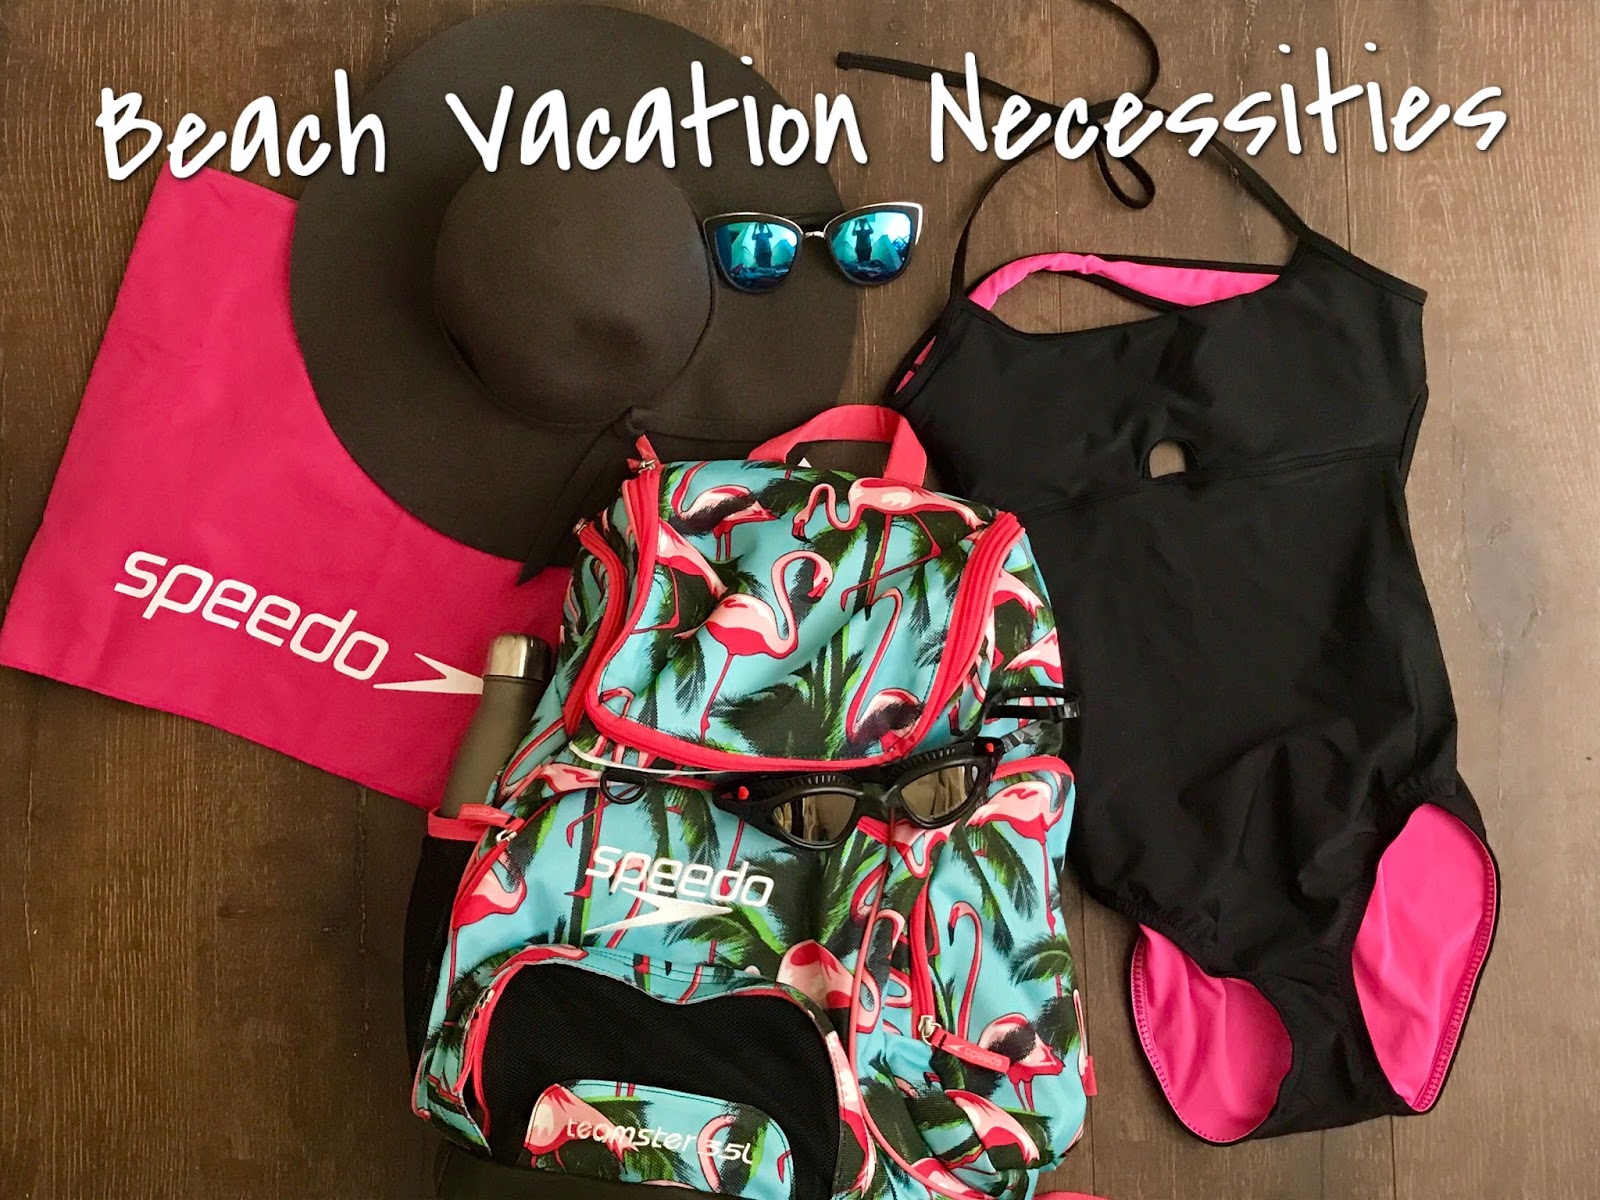 I Run For Wine Getting Beach Vaction Ready with Speedo #VacationWithSpeedo